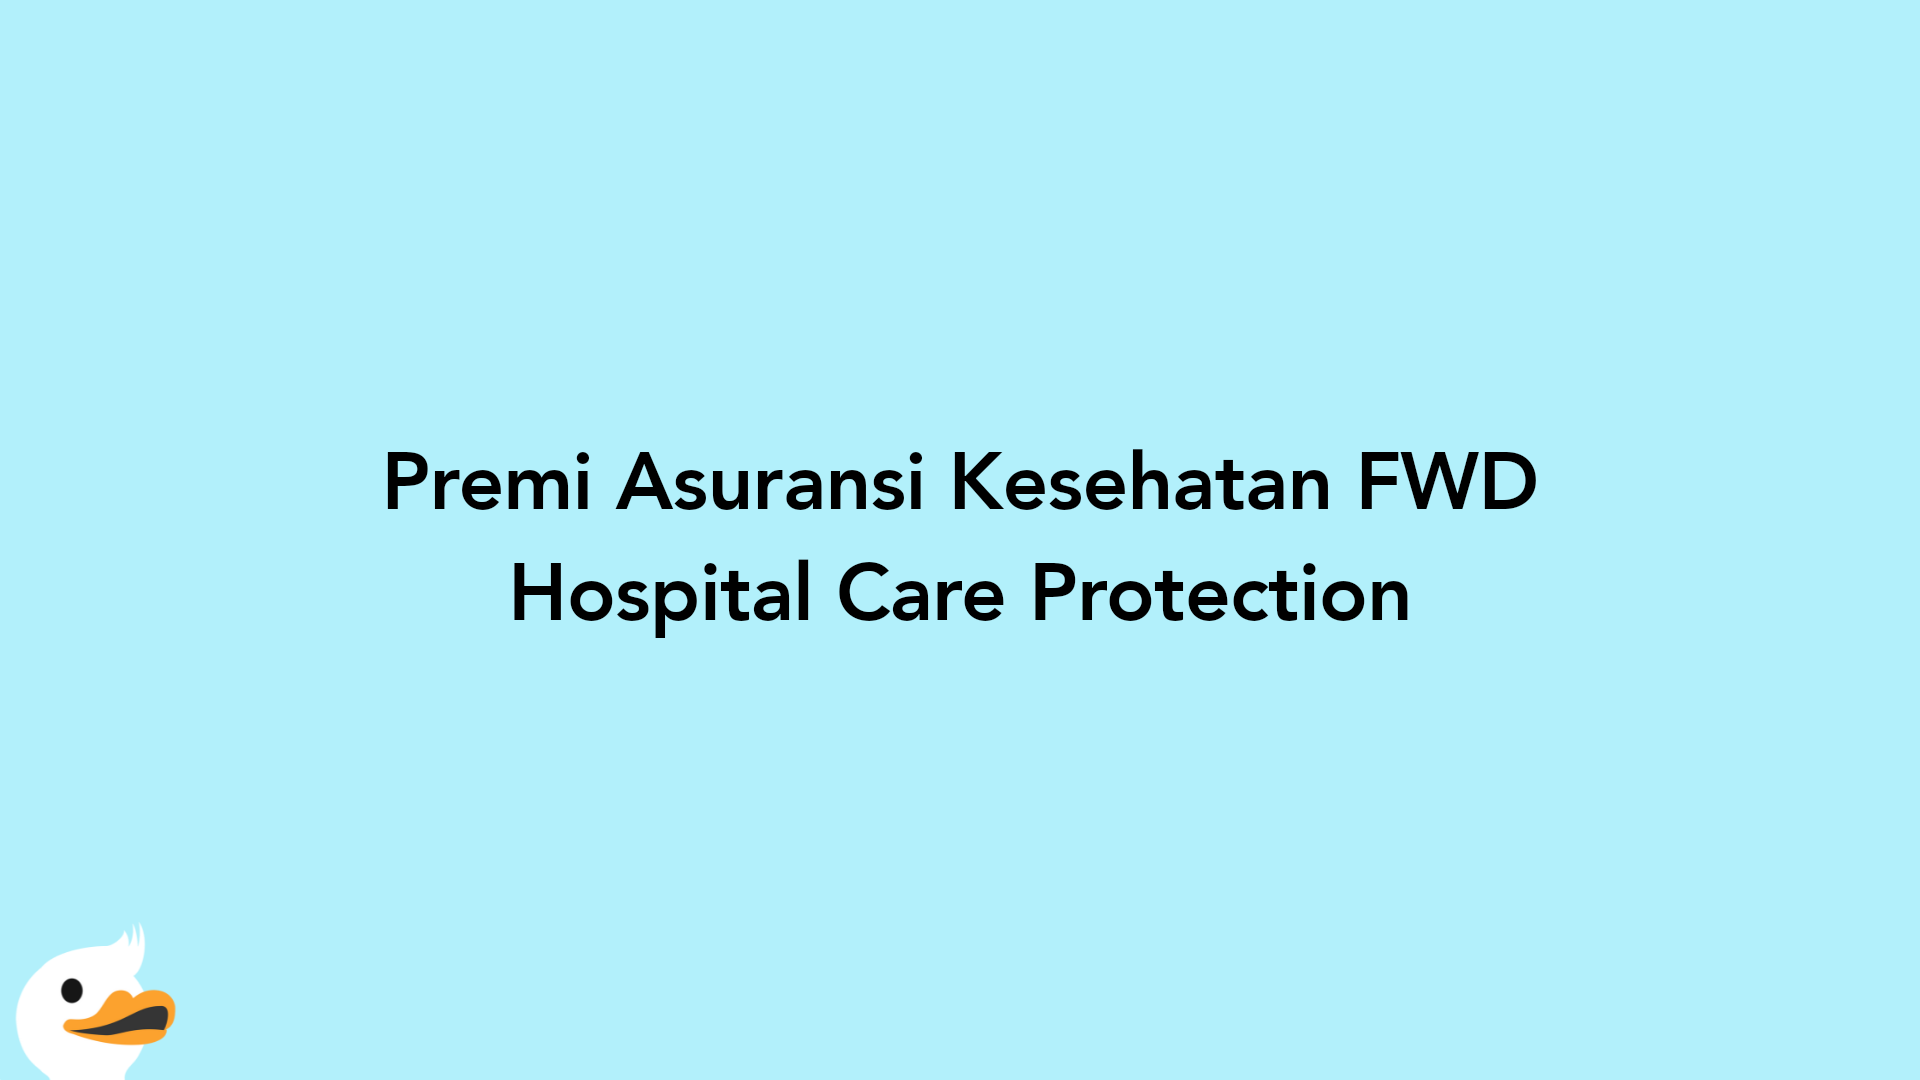 Premi Asuransi Kesehatan FWD Hospital Care Protection